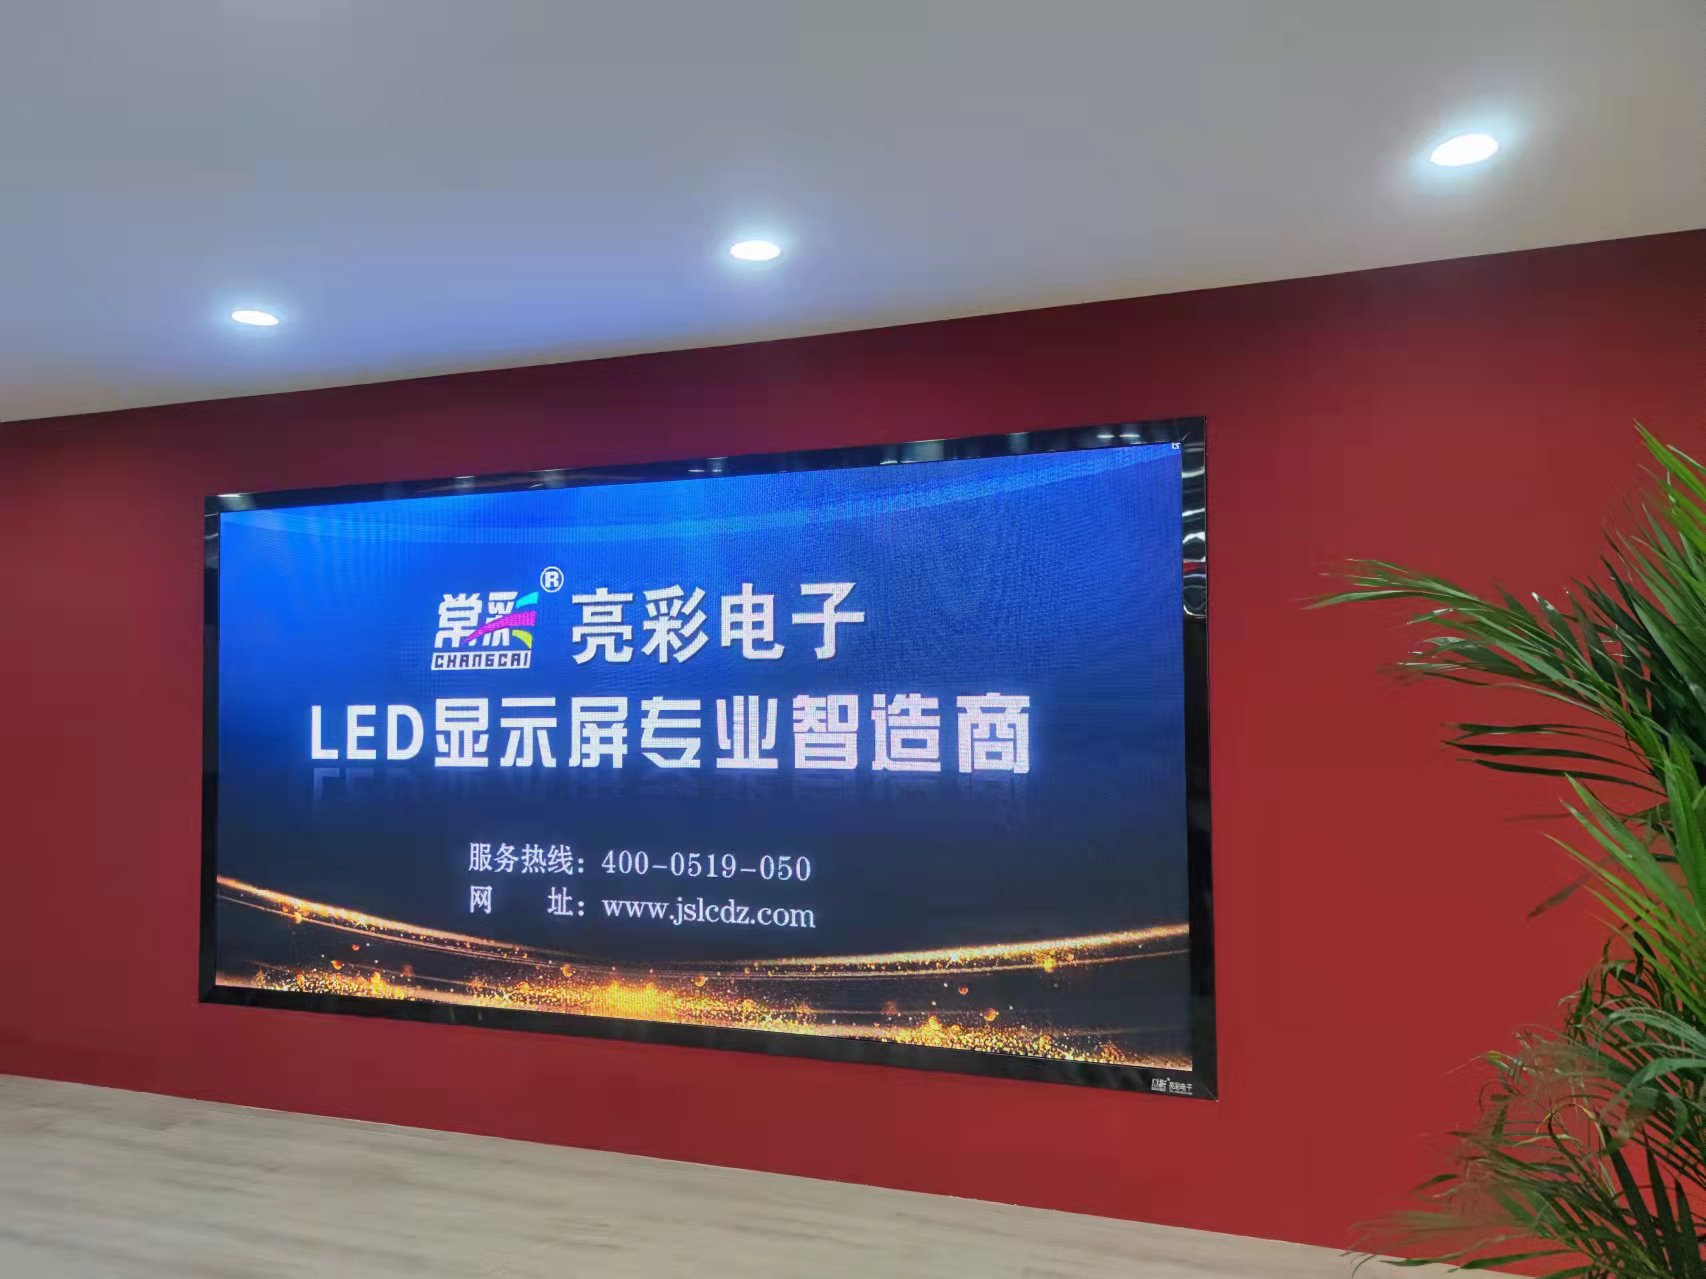 Jin Lixiang GXY2.5 display screen of a company in Jurong